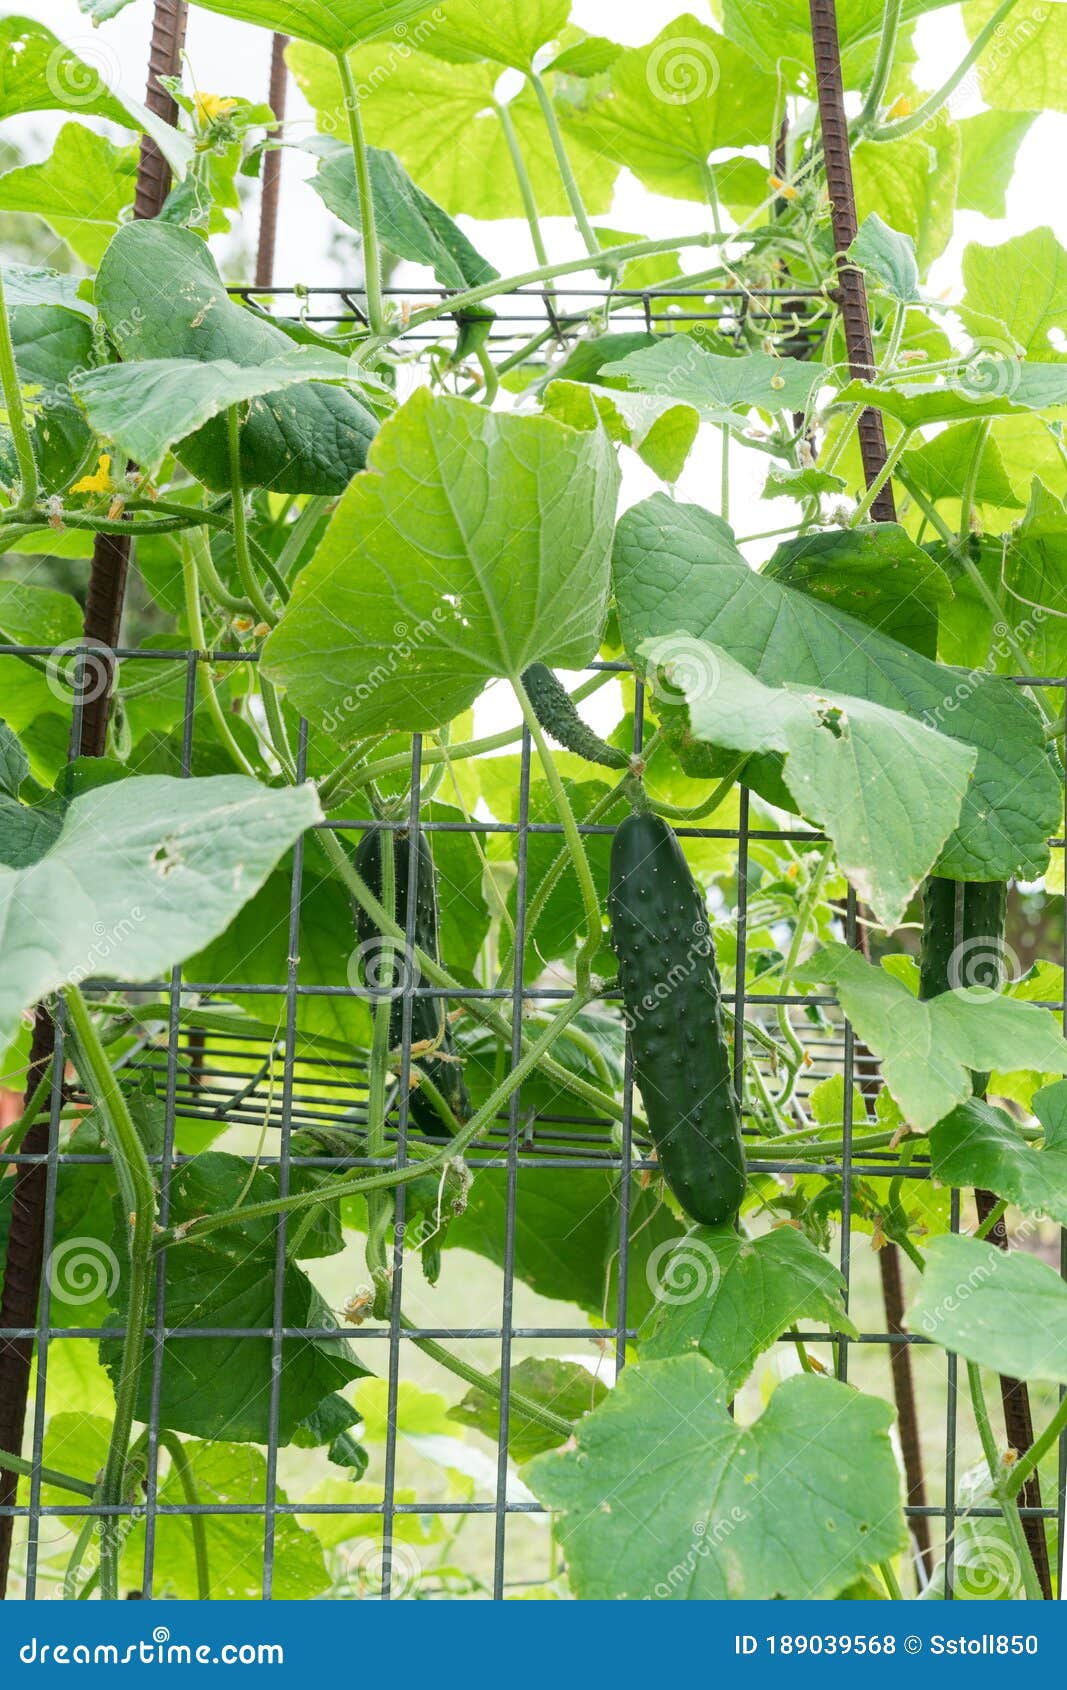 Long Green Cucumbers Hanging On Vine Stock Photo Image Of Flowering